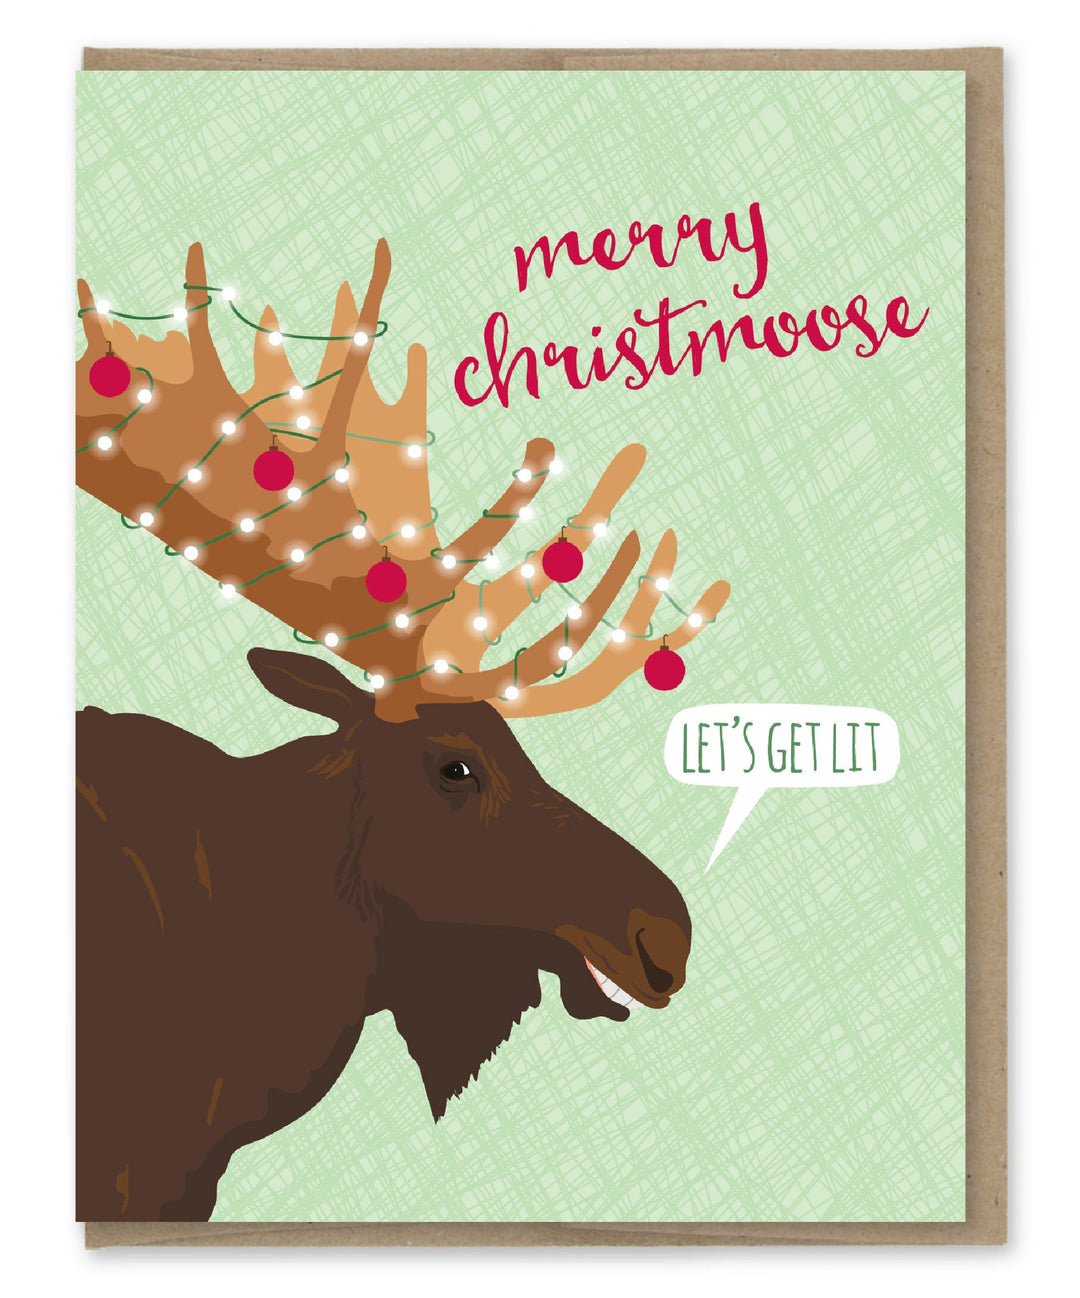 Merry Christmoose Card